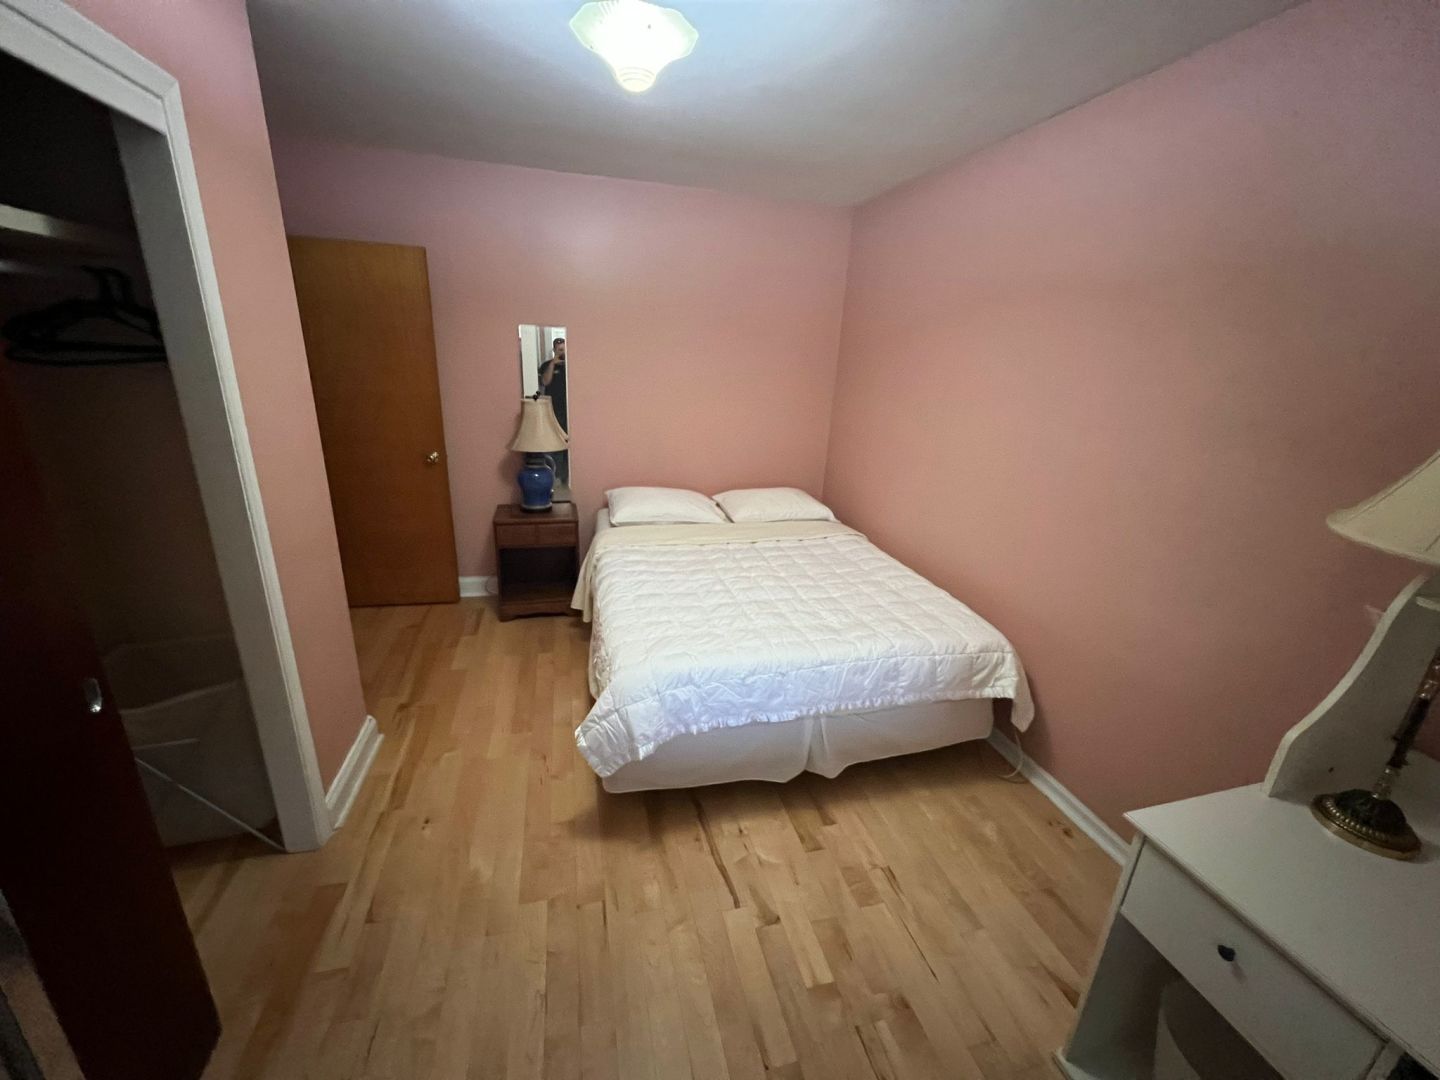 Premium Homestay Room - Whitmore Ave, Toronto room for rent 110